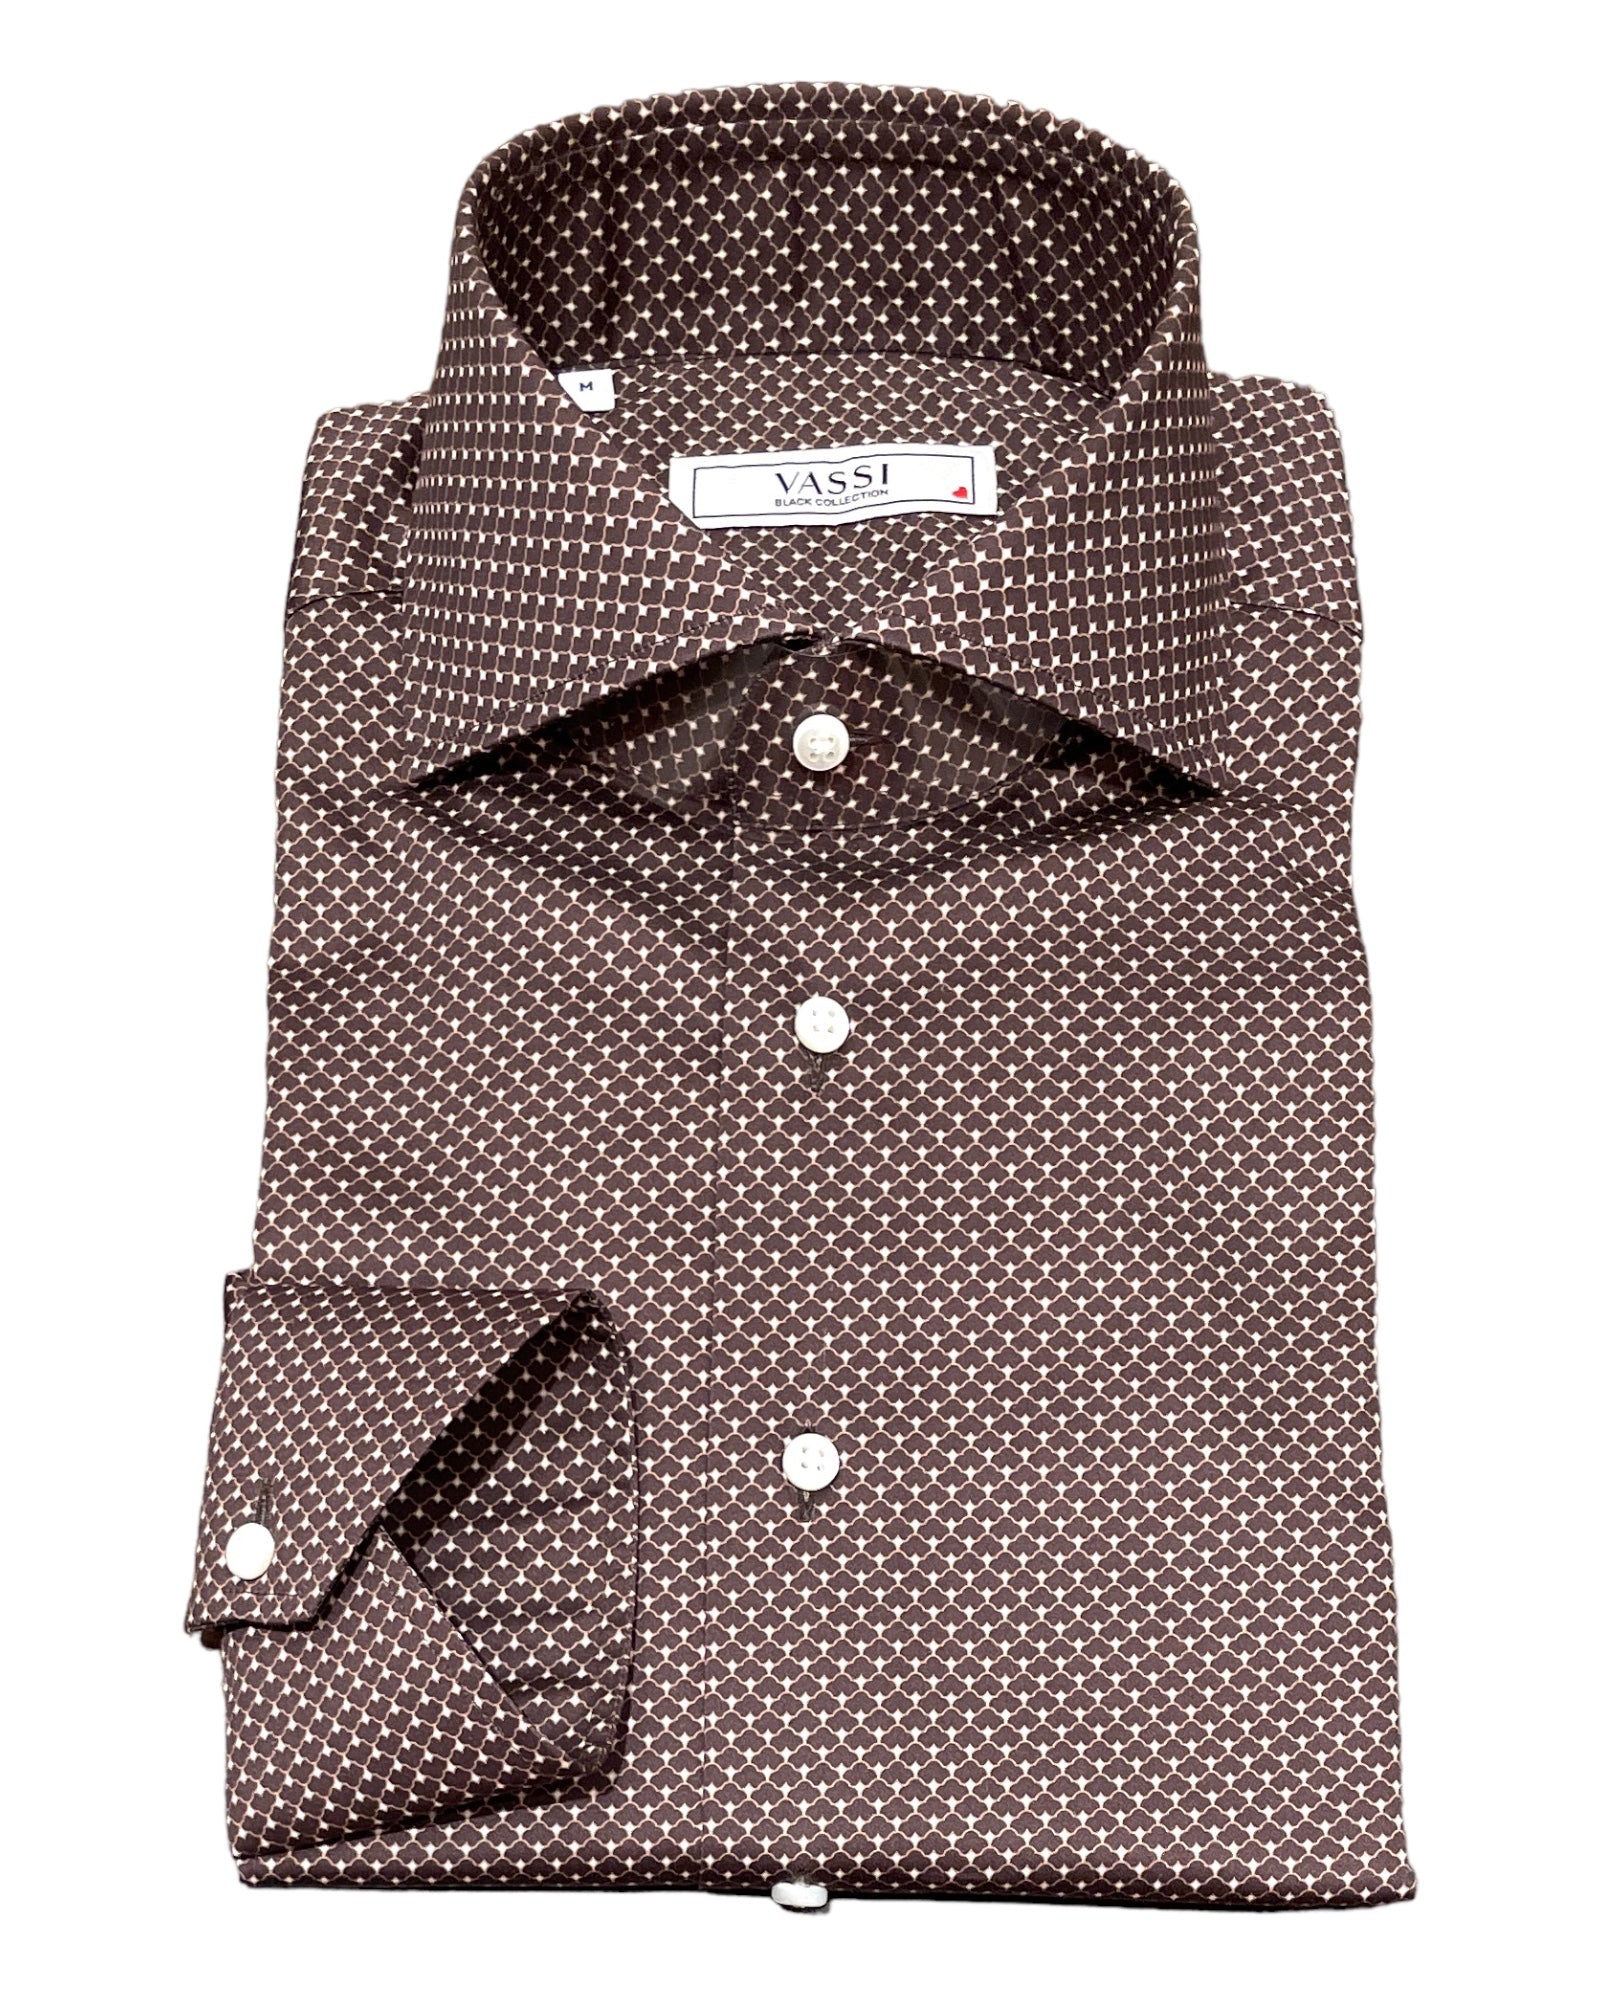 Cotton Sport Shirt - Brown and Beige pattern SPORT SHIRTSM